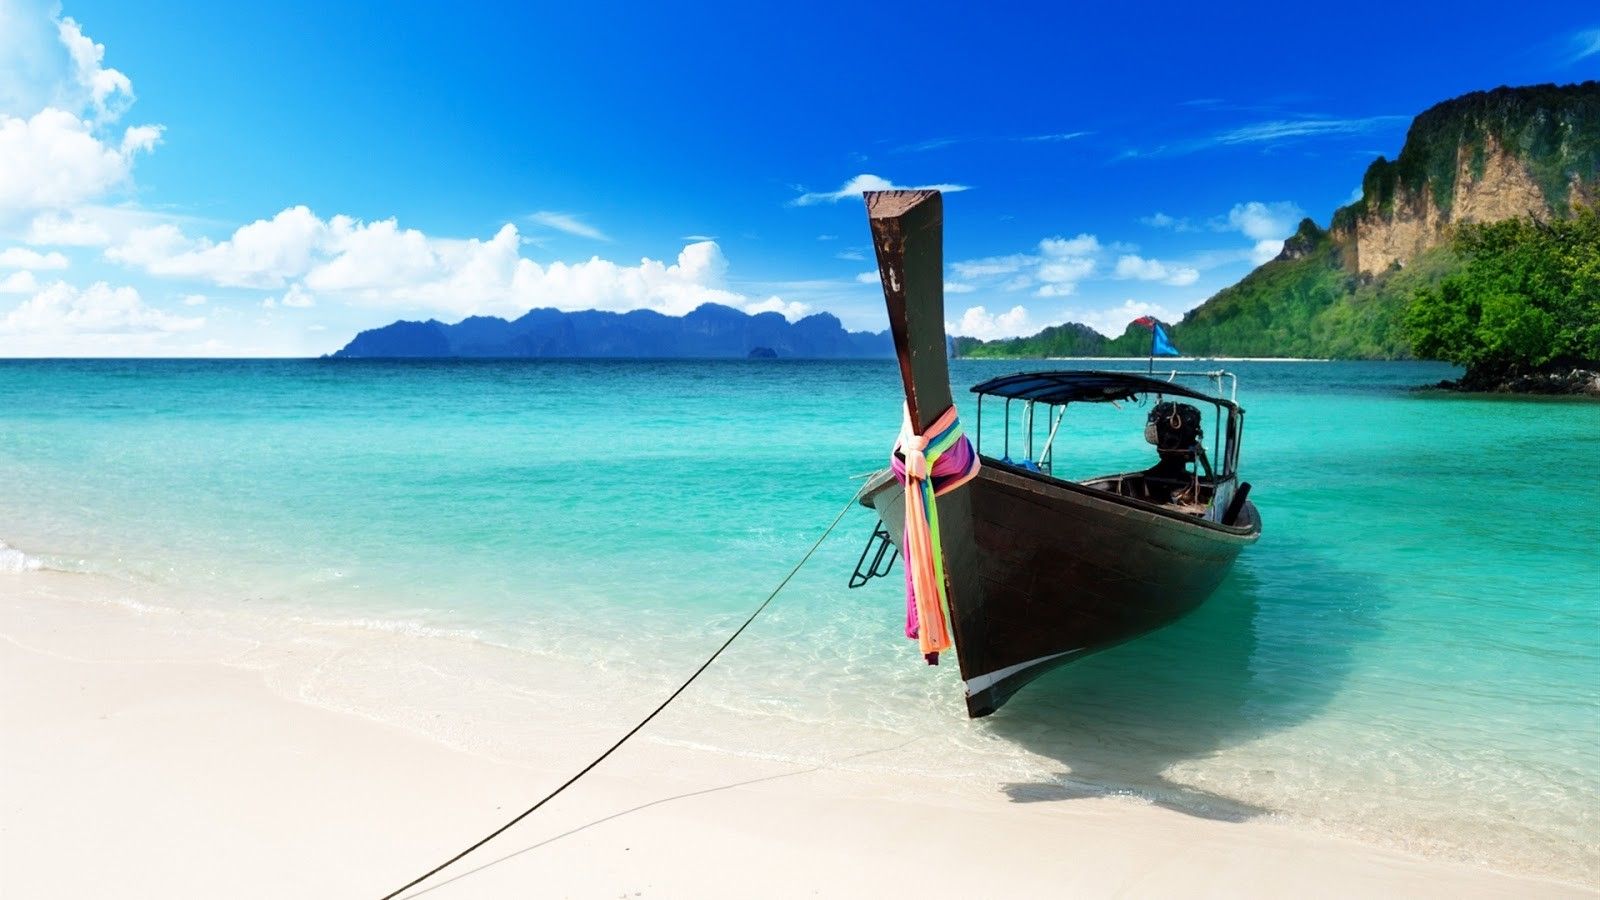 phuket wallpaper,water transportation,tropics,sky,boat,vacation